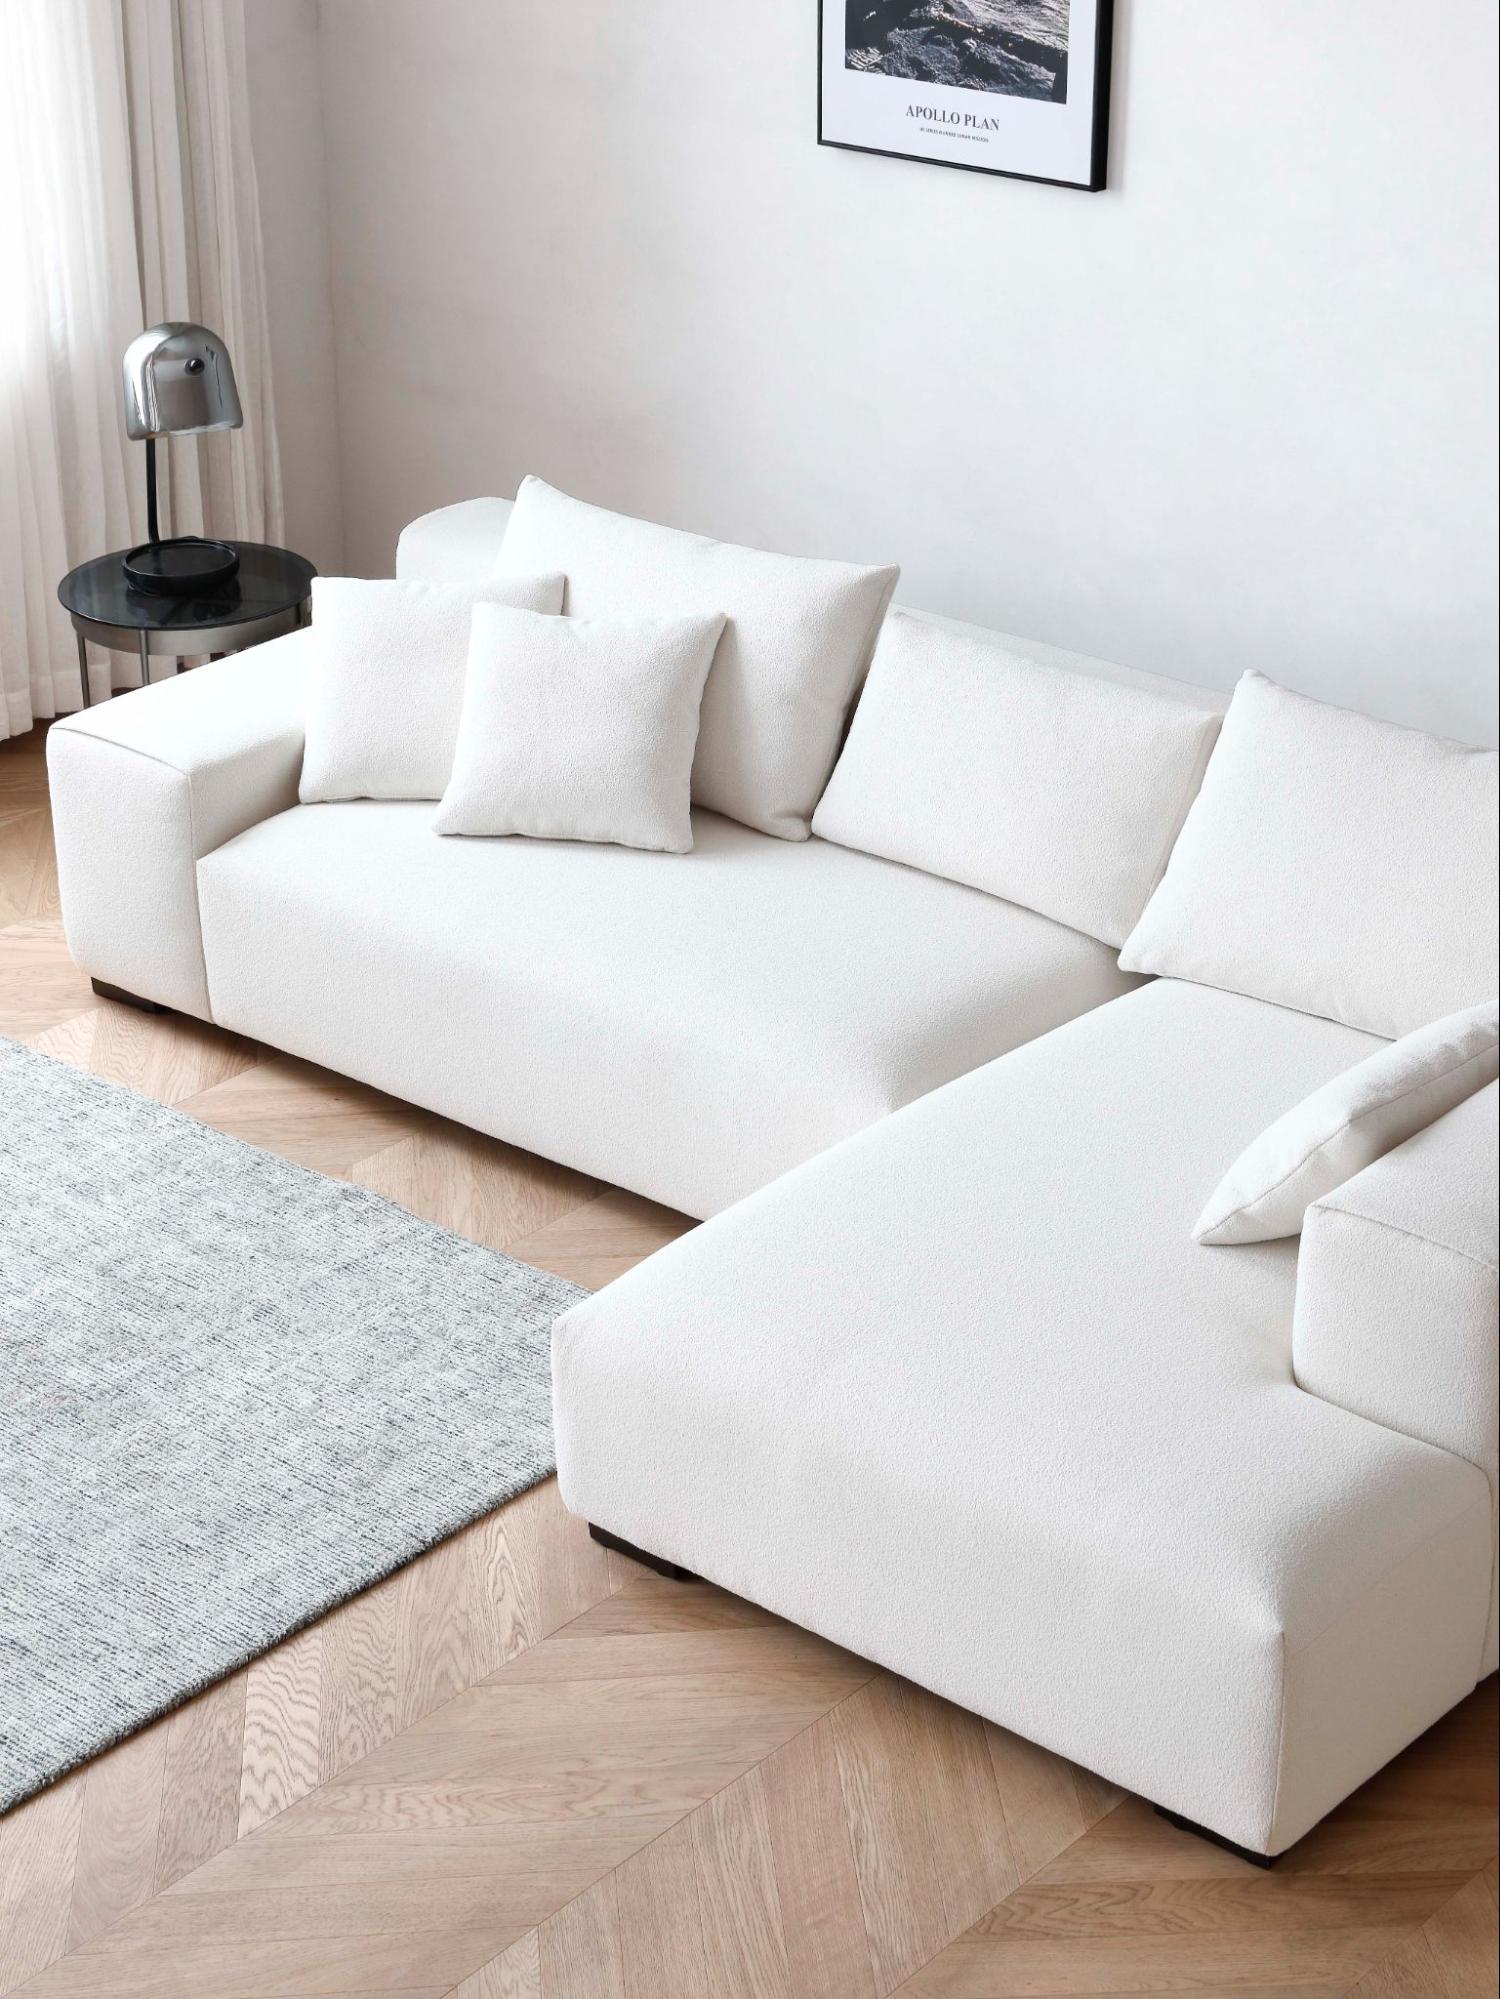 Imola Sectional Sofa by Acanva